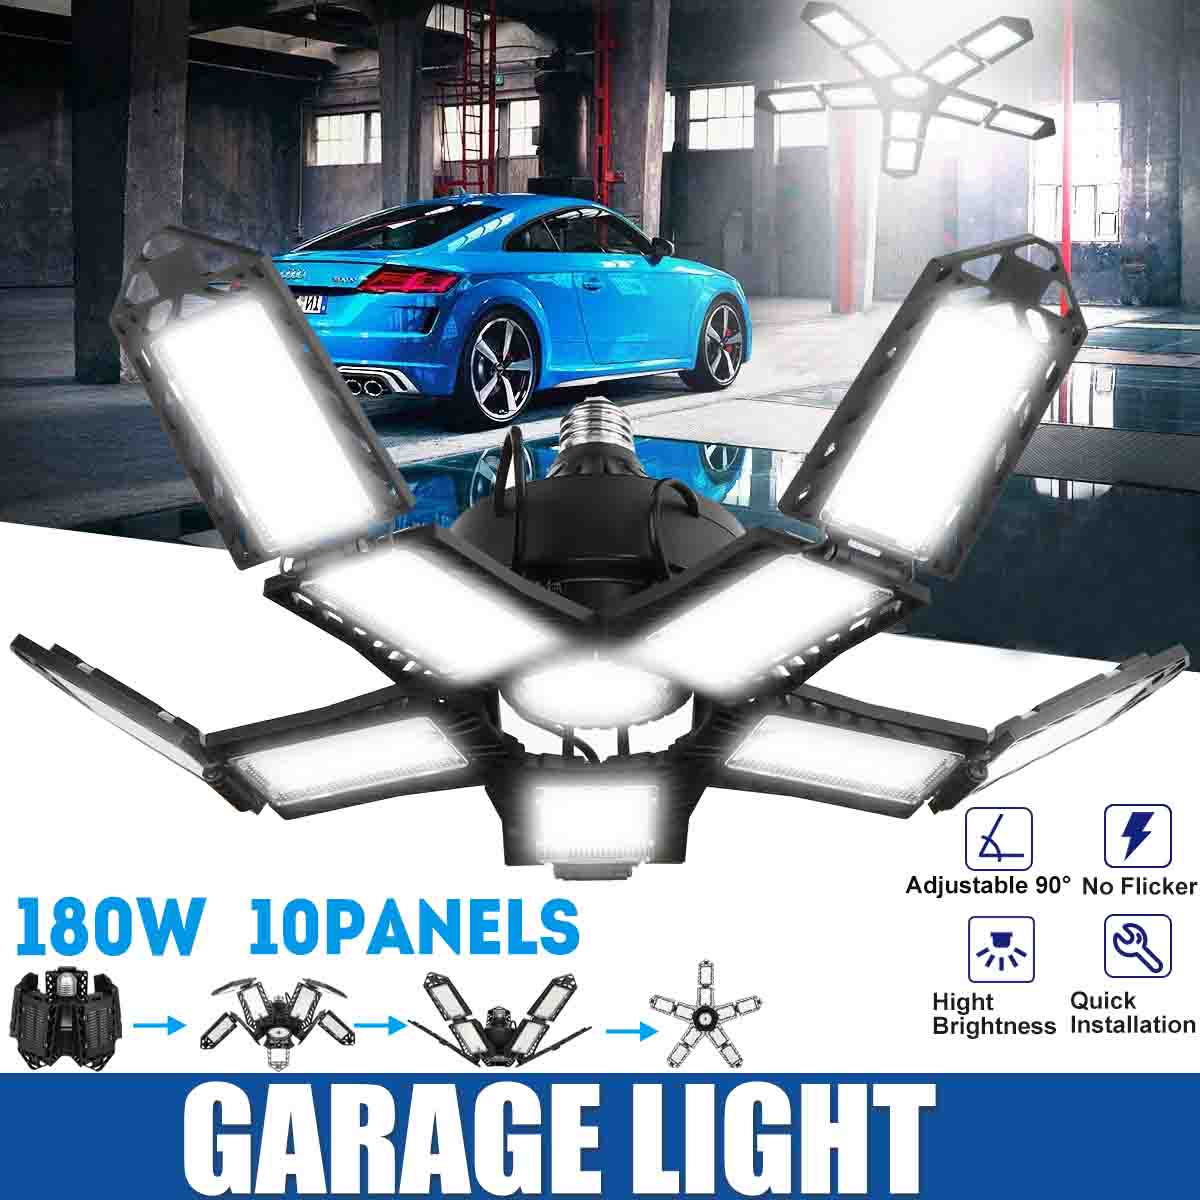 New Deformable Industrial Lighting E27 Led Fan Garage Light Super Bright 18000LM 2835 Led High Bay Industrial Lamp for Workshop